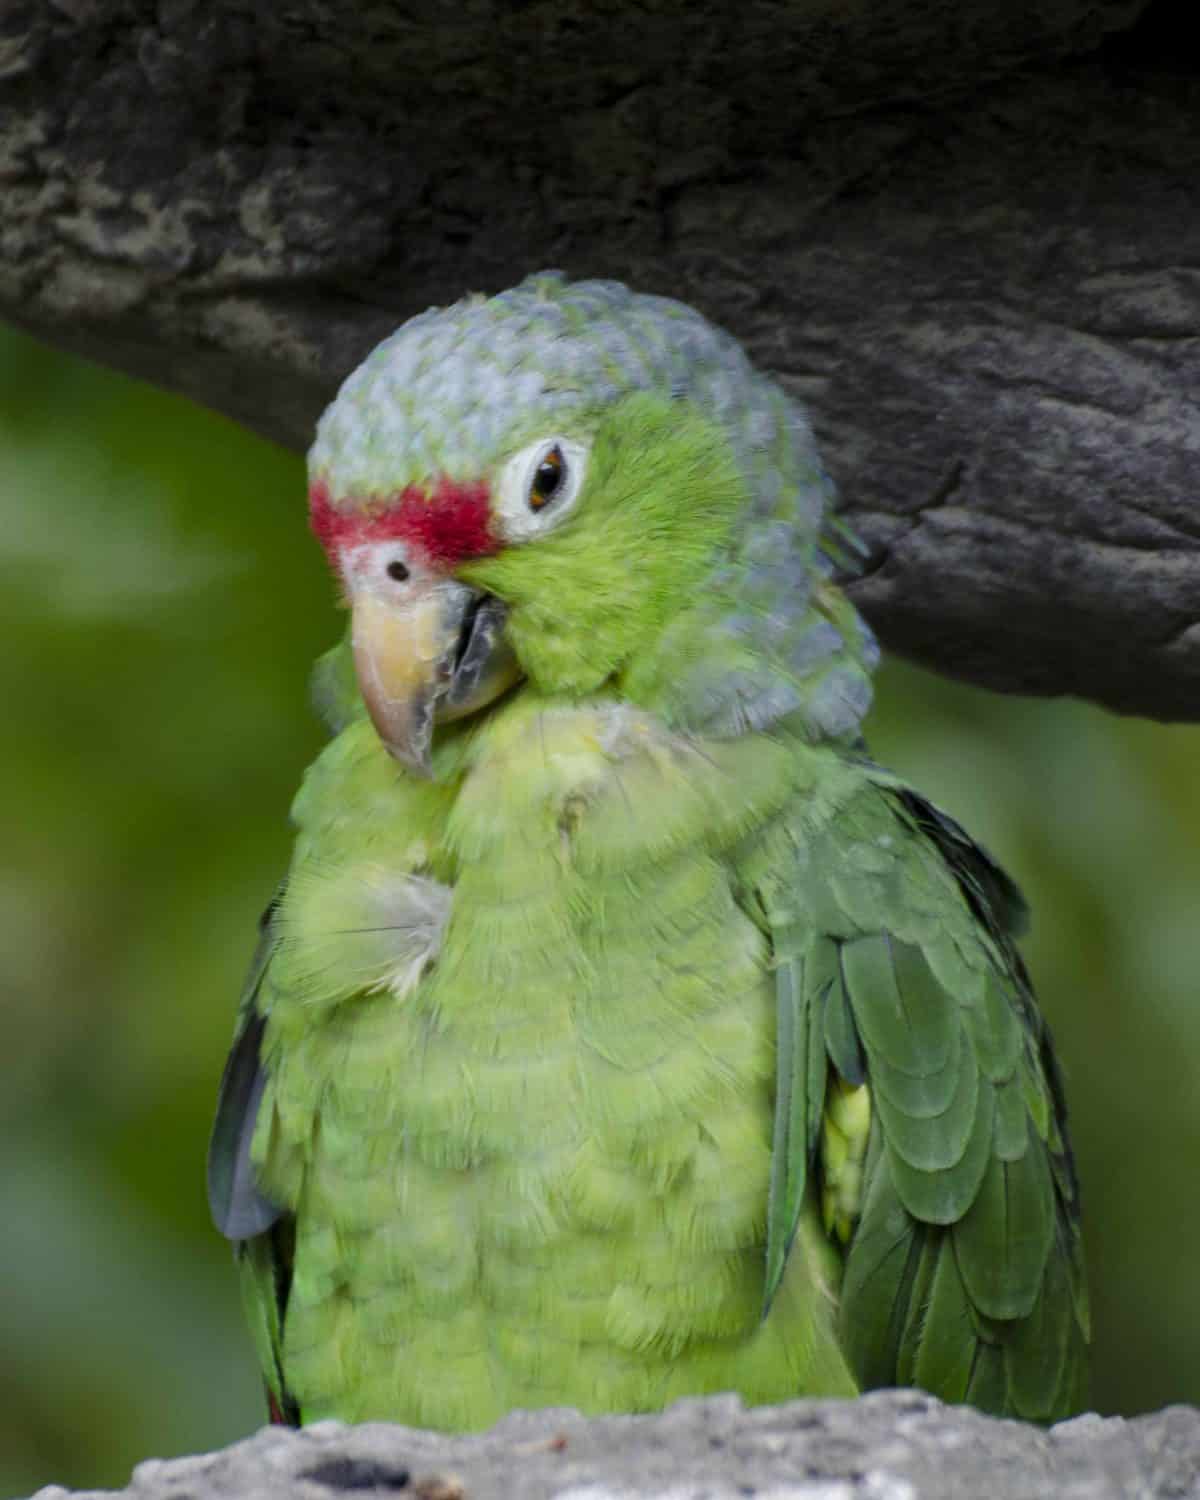 Parrot, Parque Histórico, Guayaquil, Ecuador